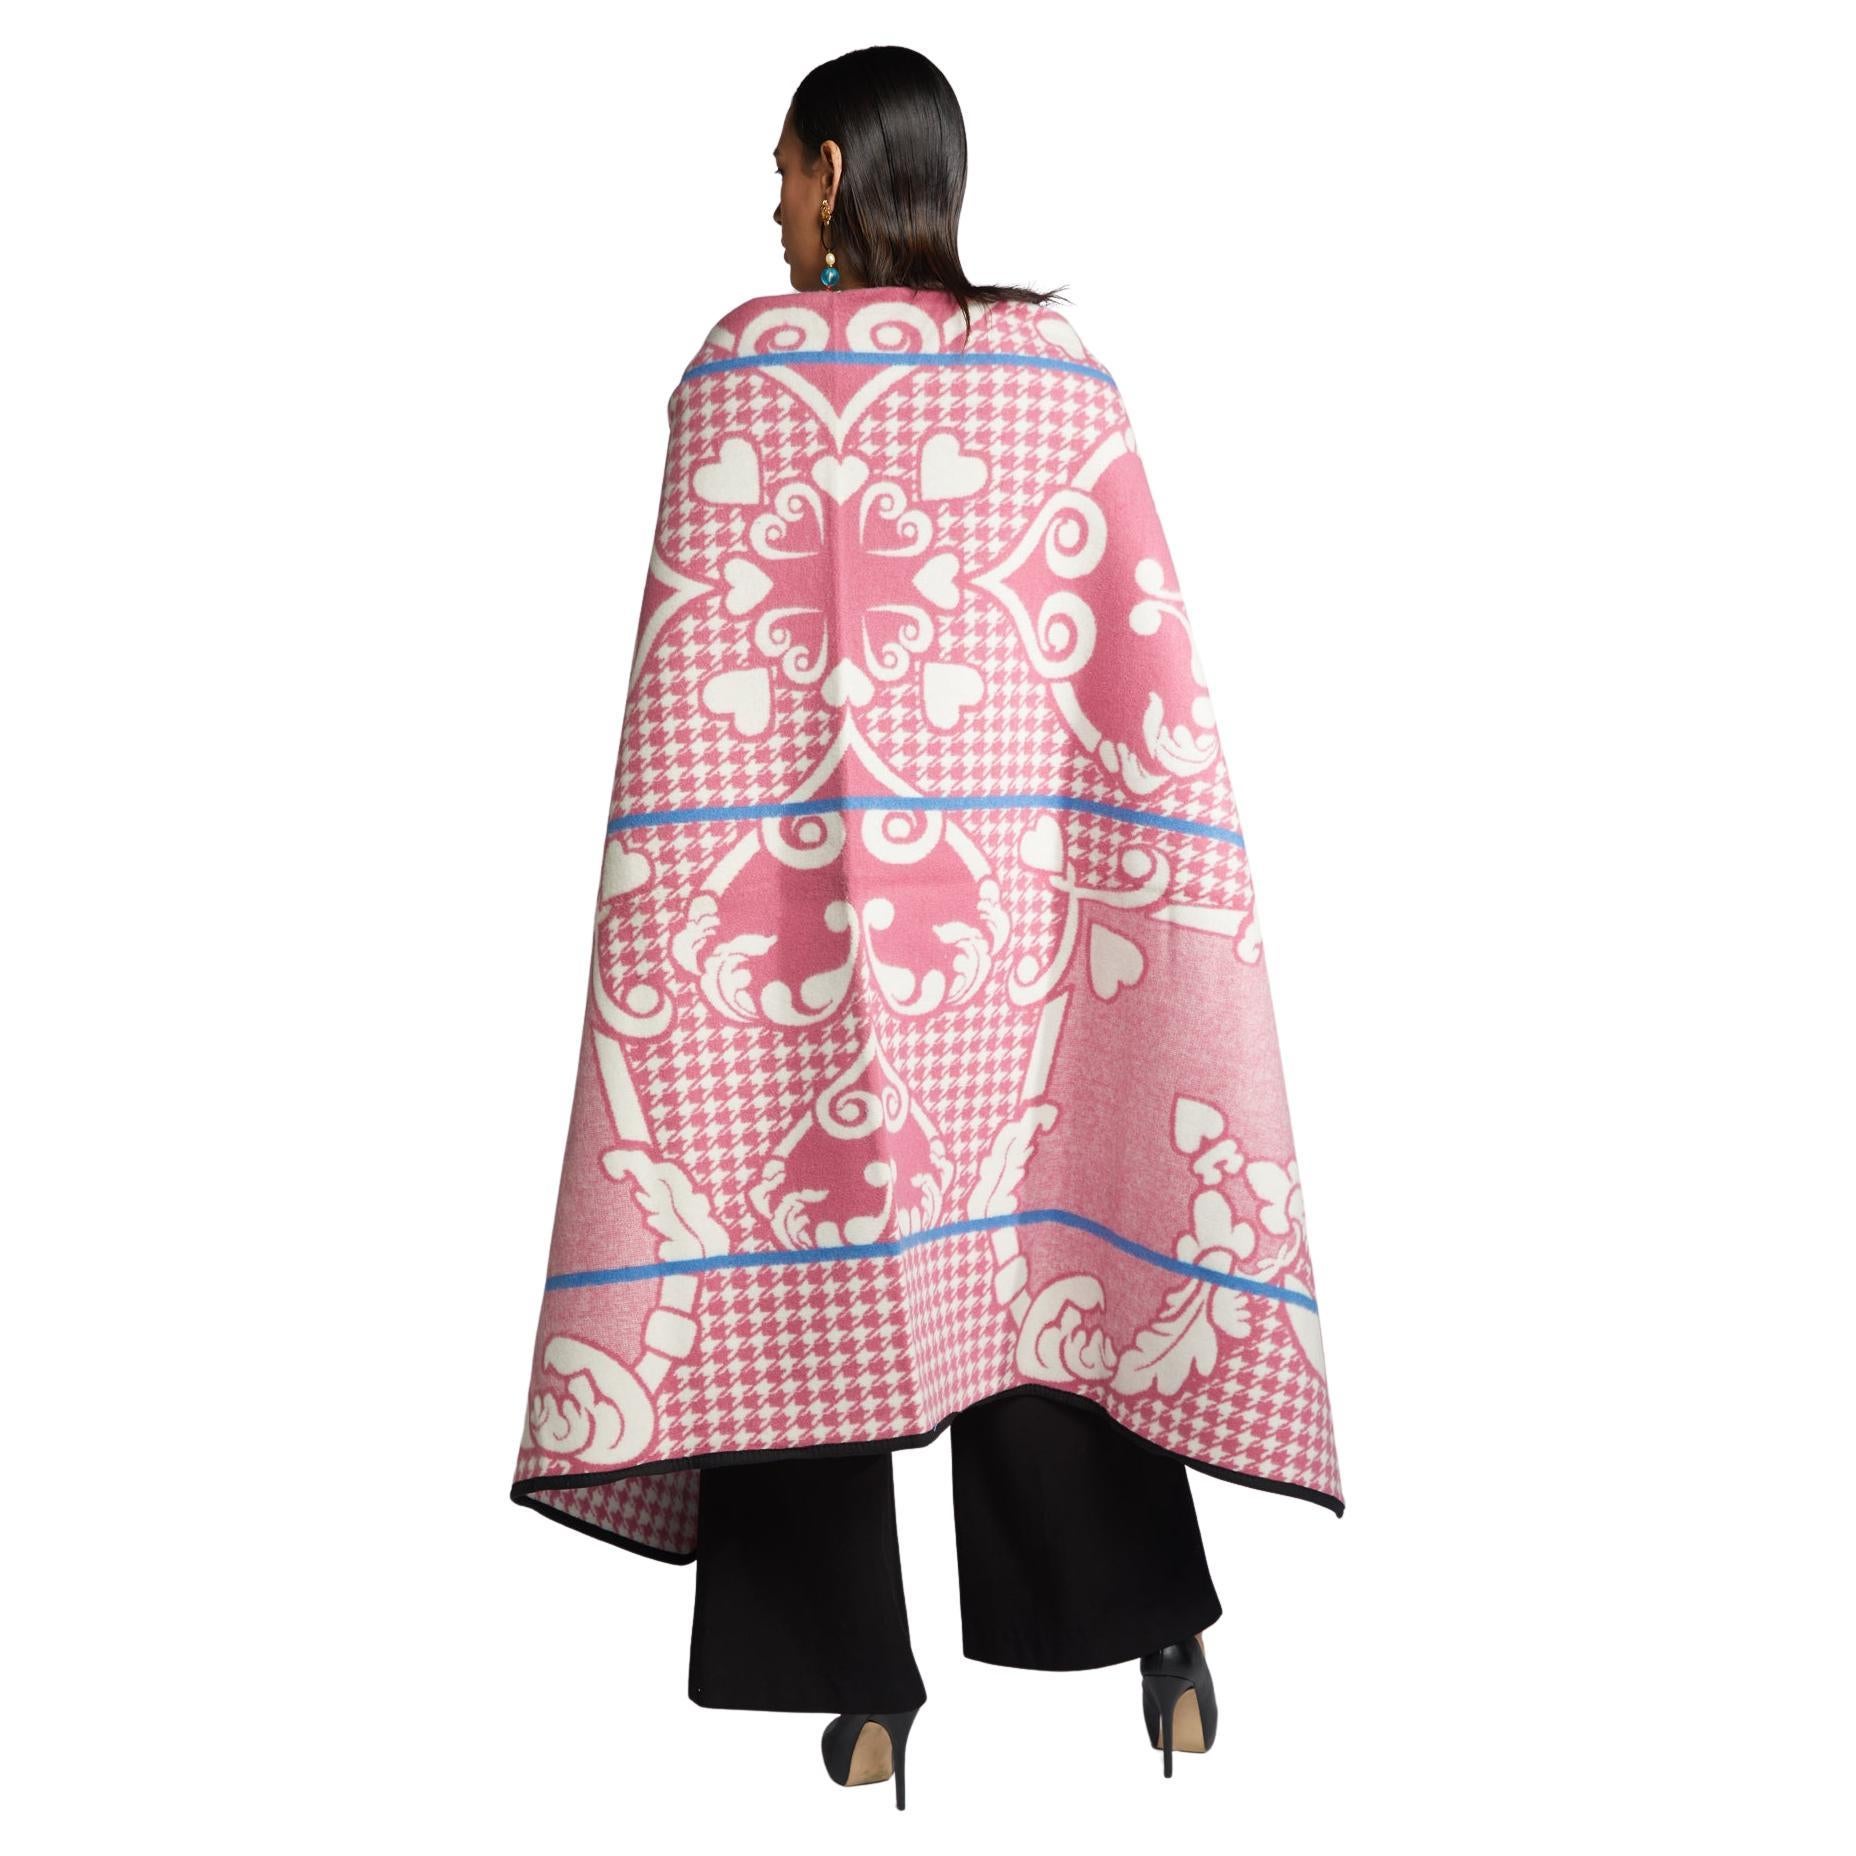 Basotho Heritage Blanket Scarf - Cherry Blossom Heart For Sale